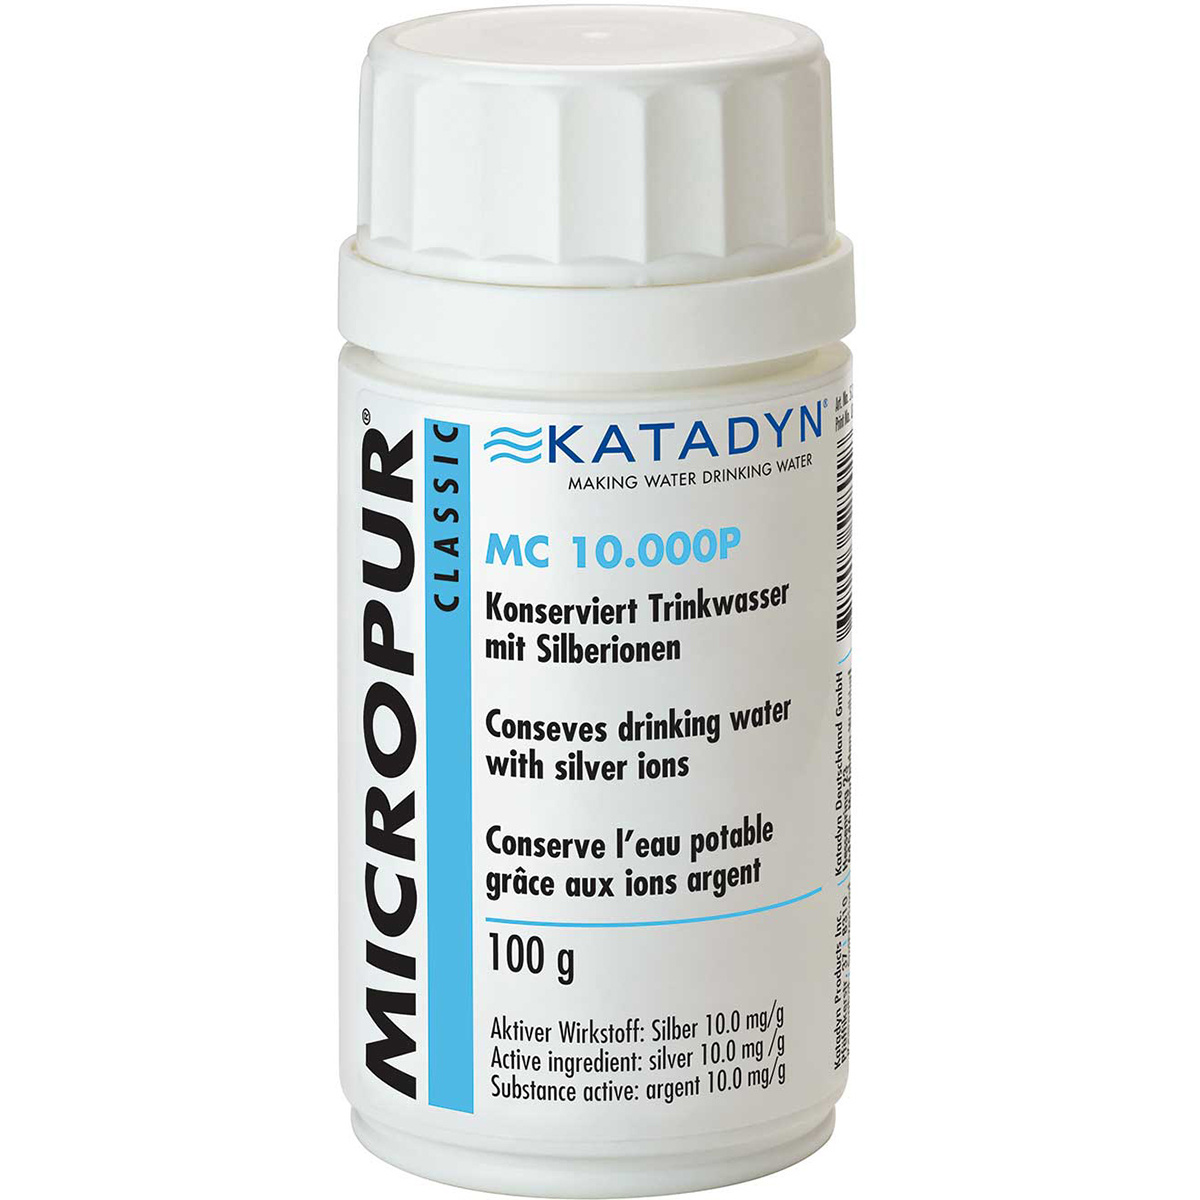 Image of Katadyn Micropur Classic MC 10.000P